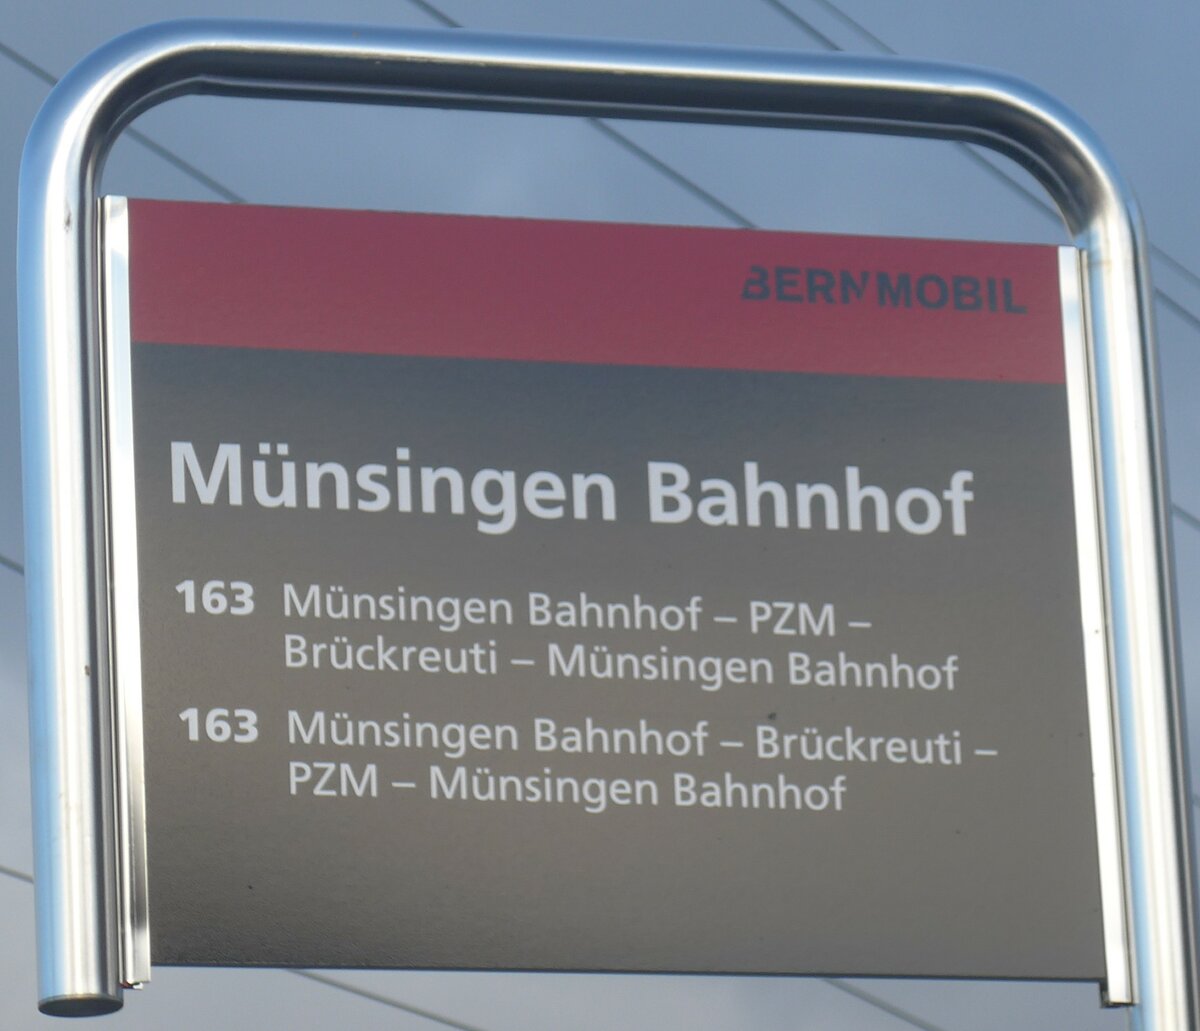 (212'890) - BERNMOBIL-Haltestellenschild - Mnsingen, Bahnhof - am 14. Dezember 2019